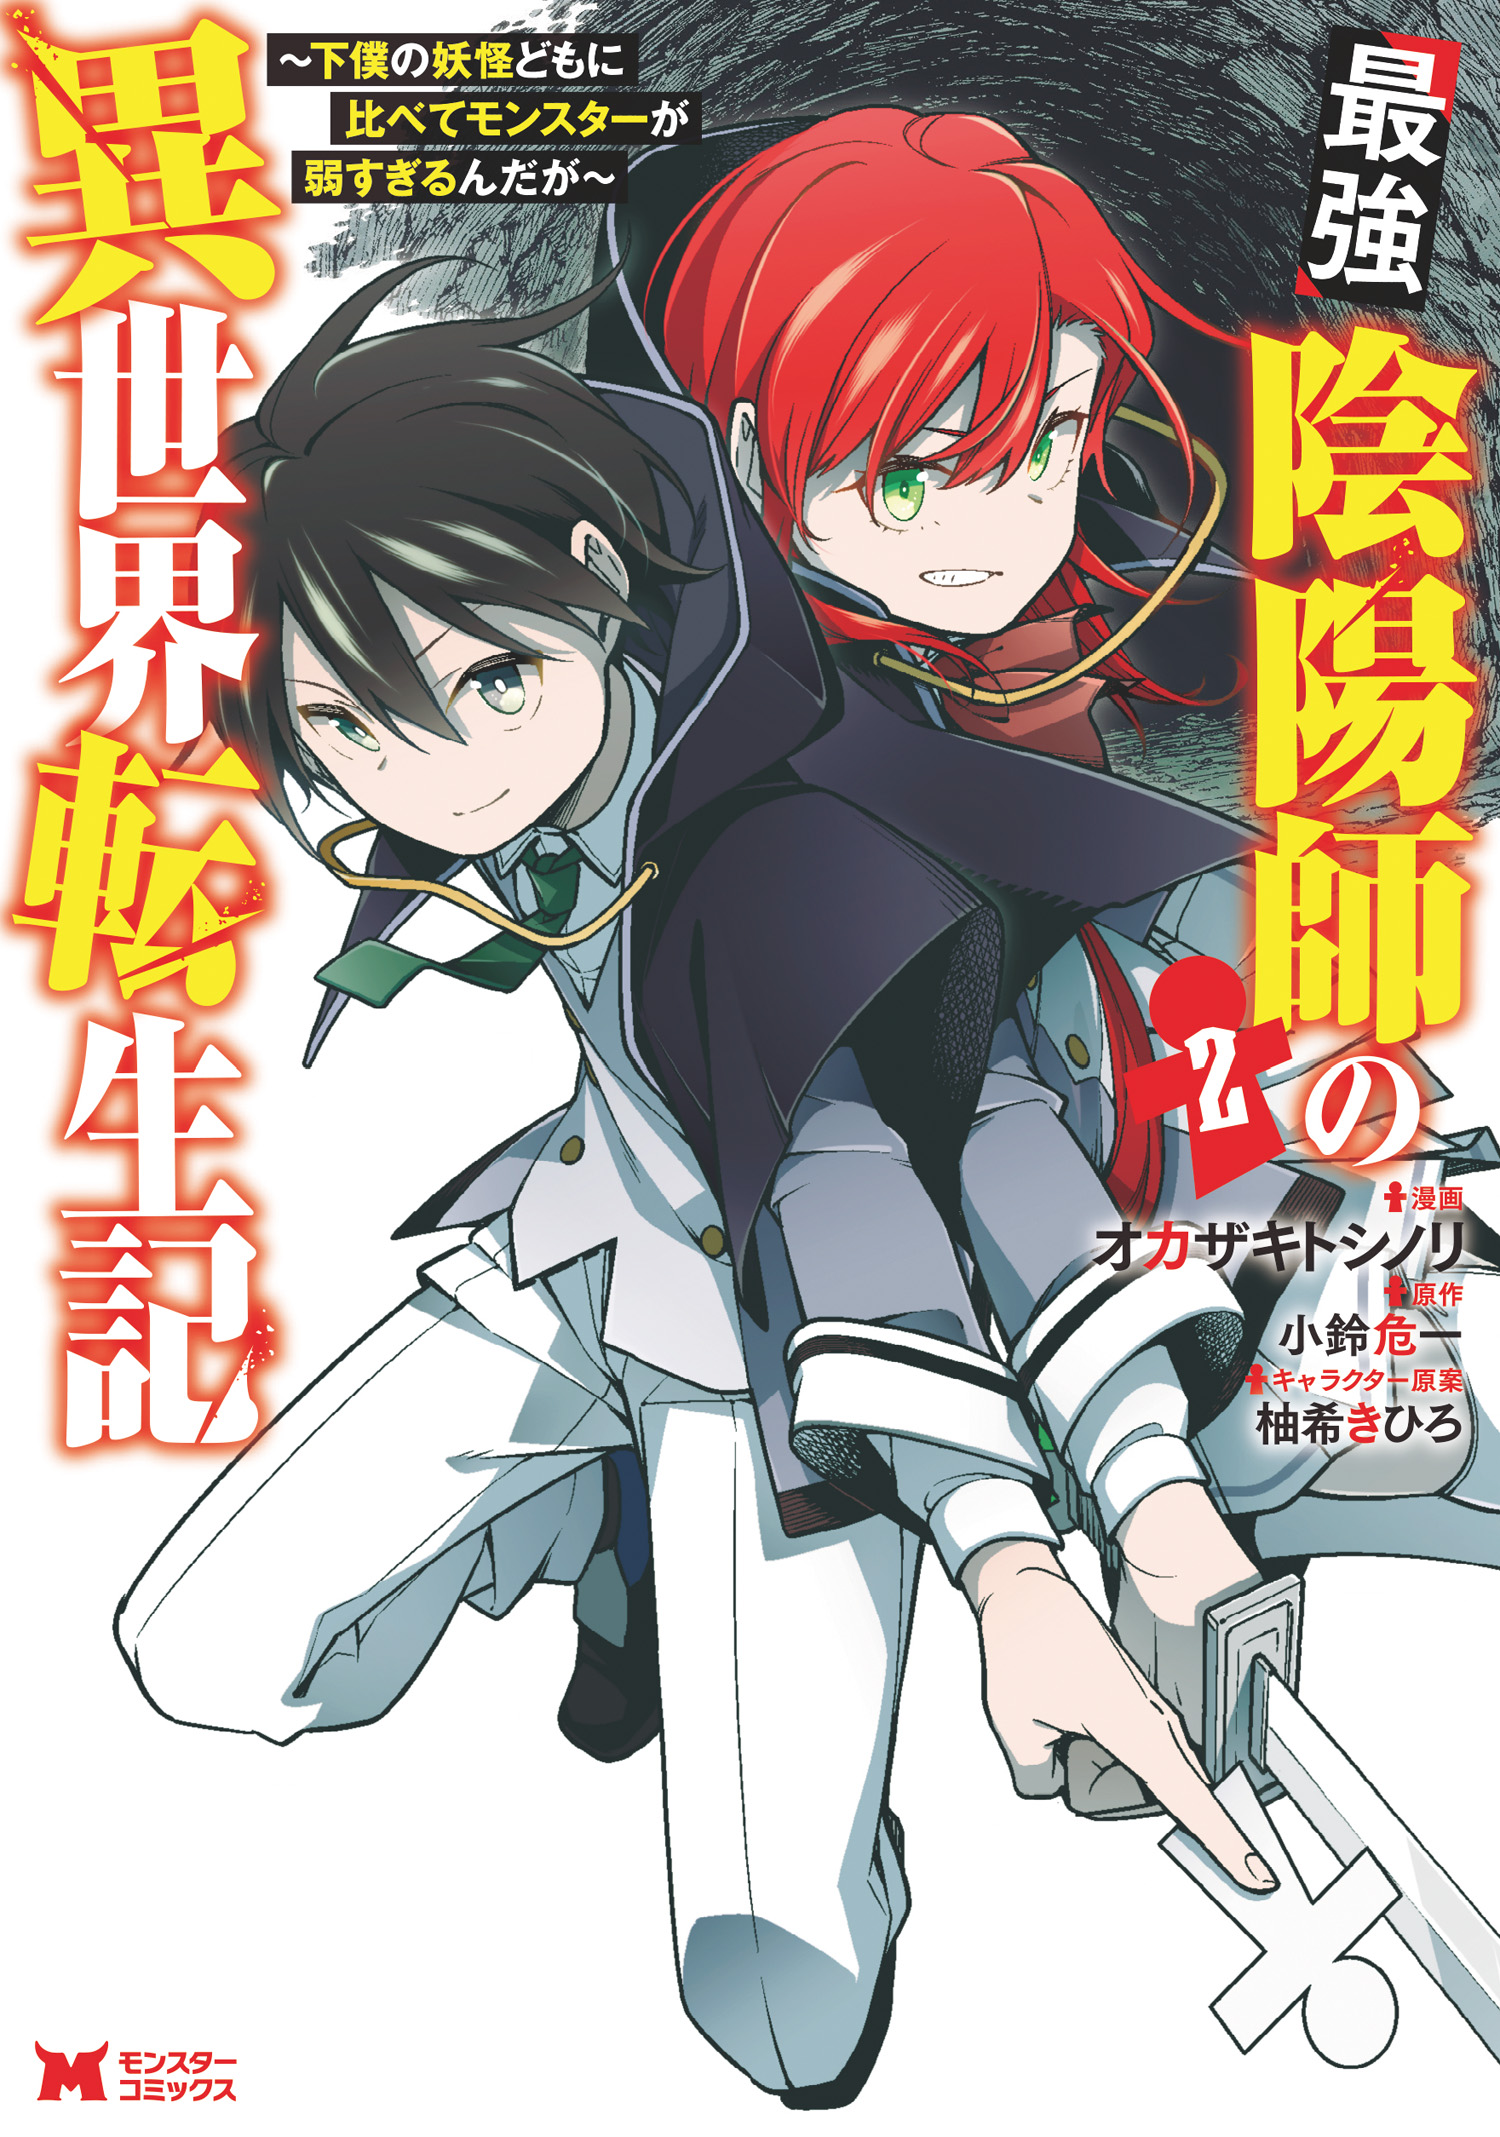 Saikyou Onmyouji no Isekai Tenseiki light novel volume 1 cover